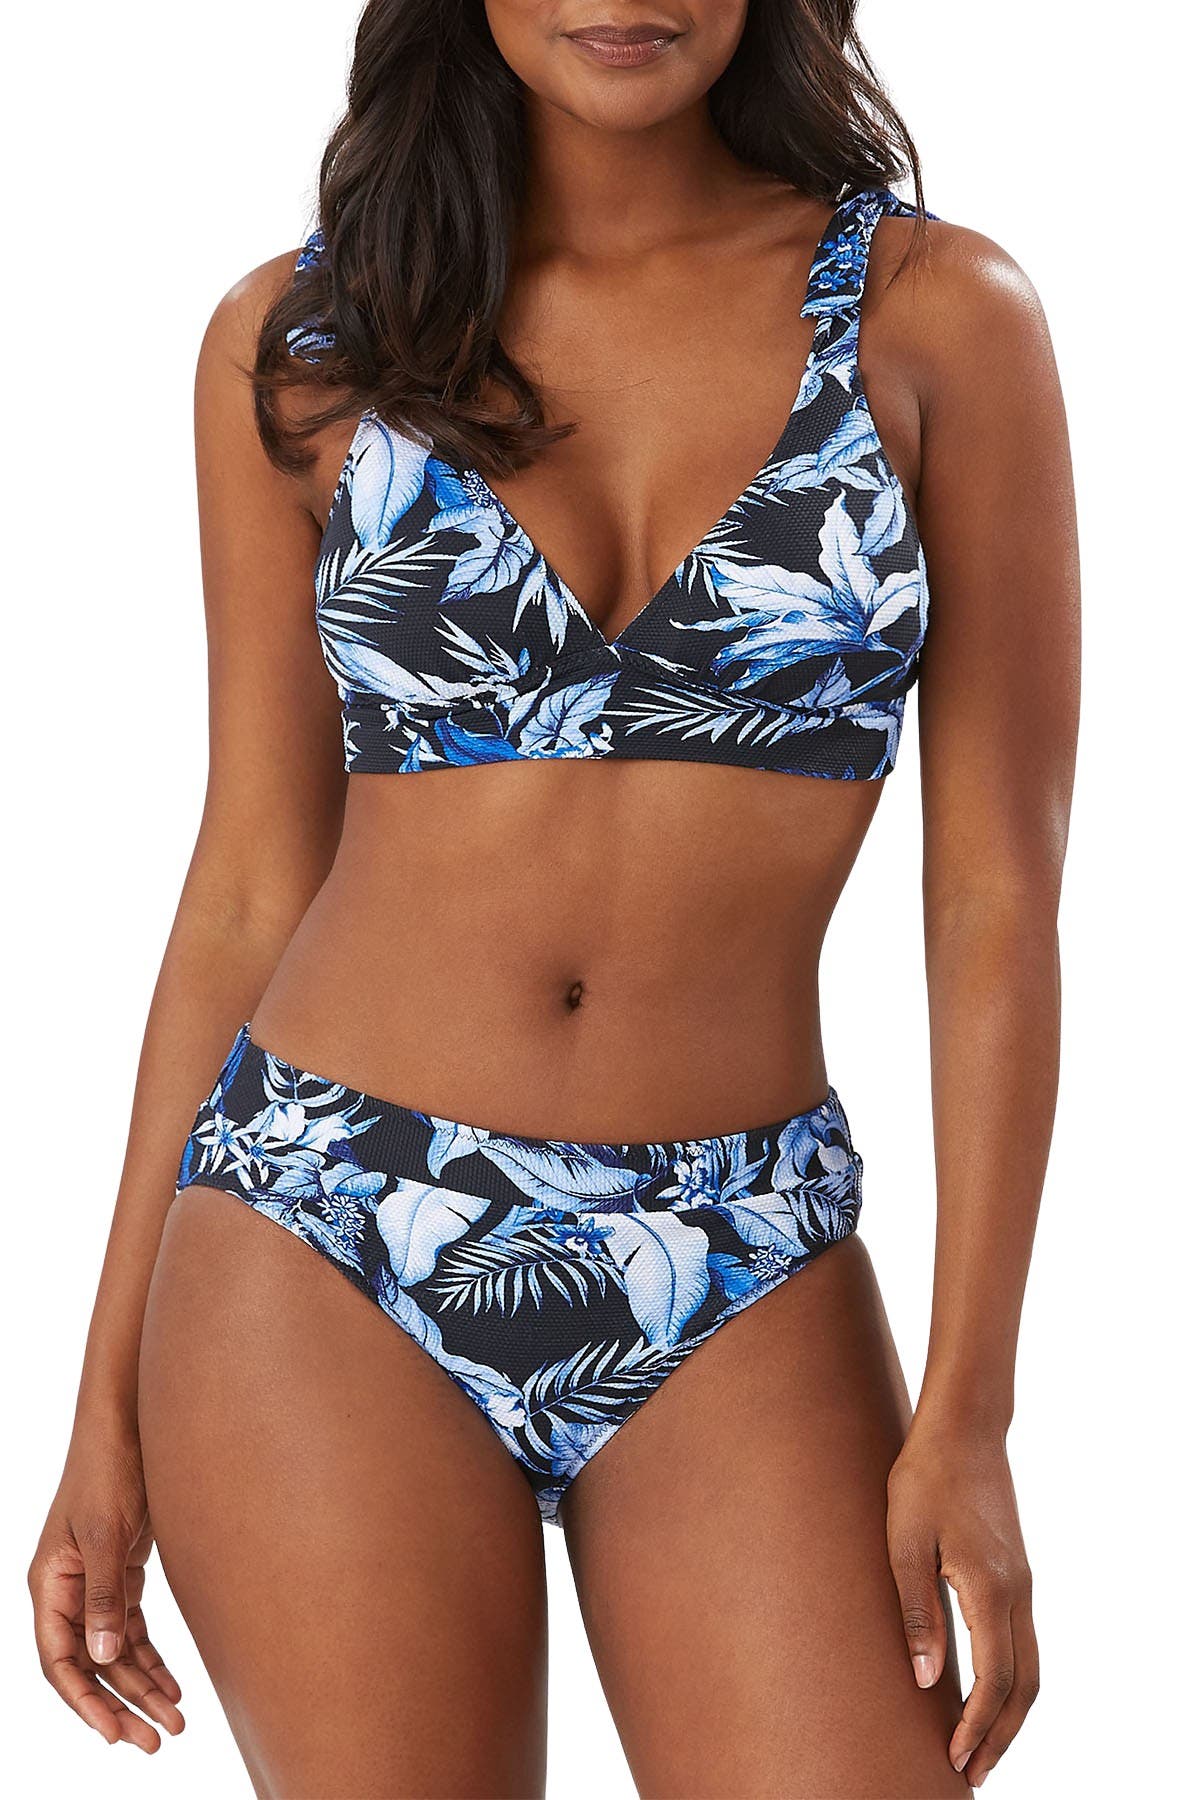 tommy bahama reversible swimsuit